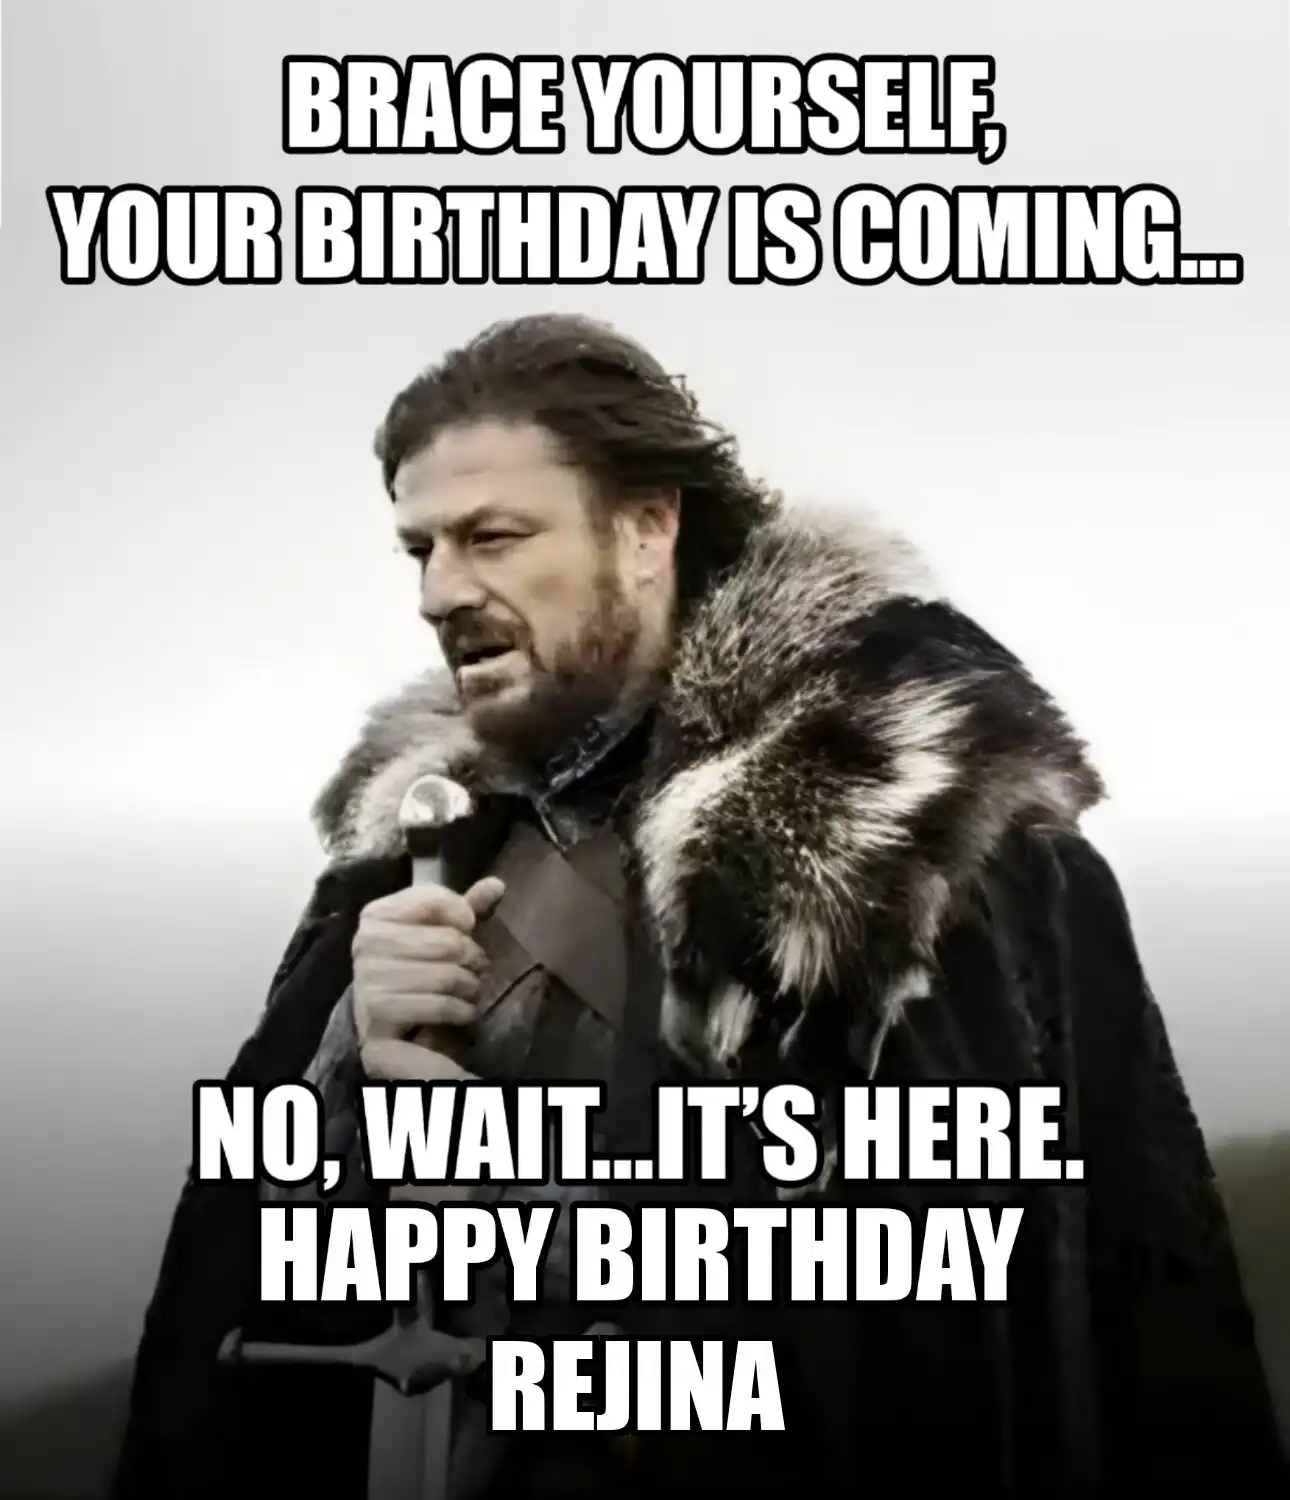 Happy Birthday Rejina Brace Yourself Your Birthday Is Coming Meme